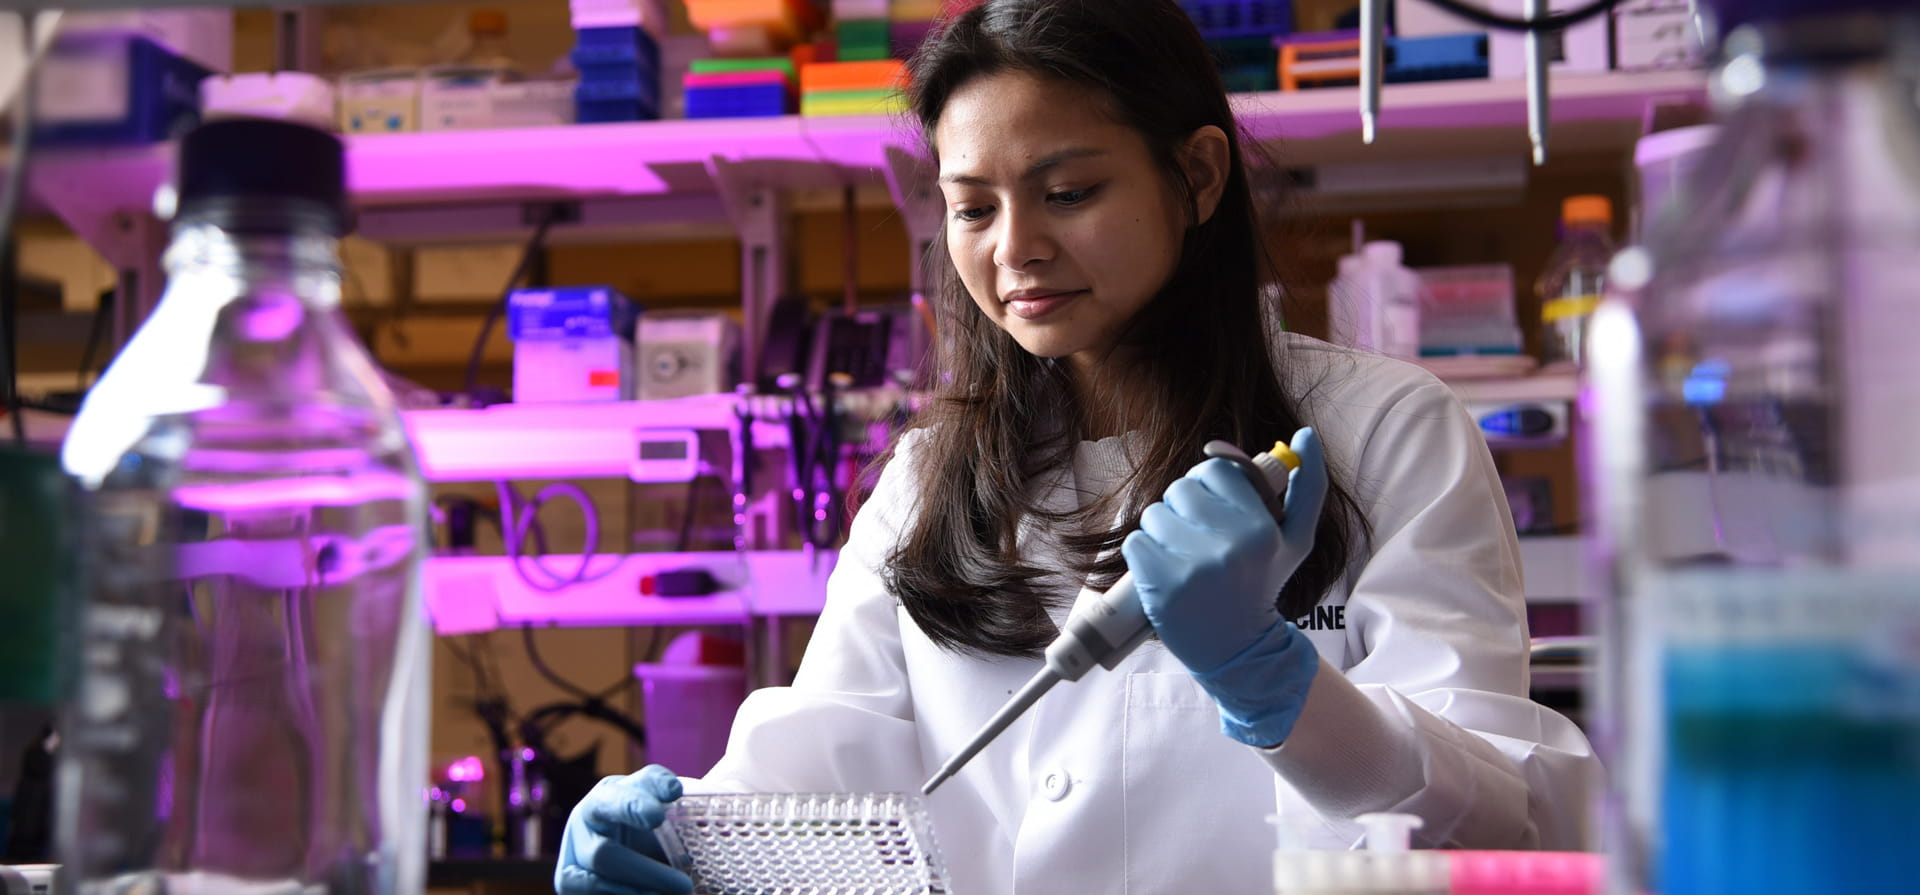 PhD student works in the lab preparing samples